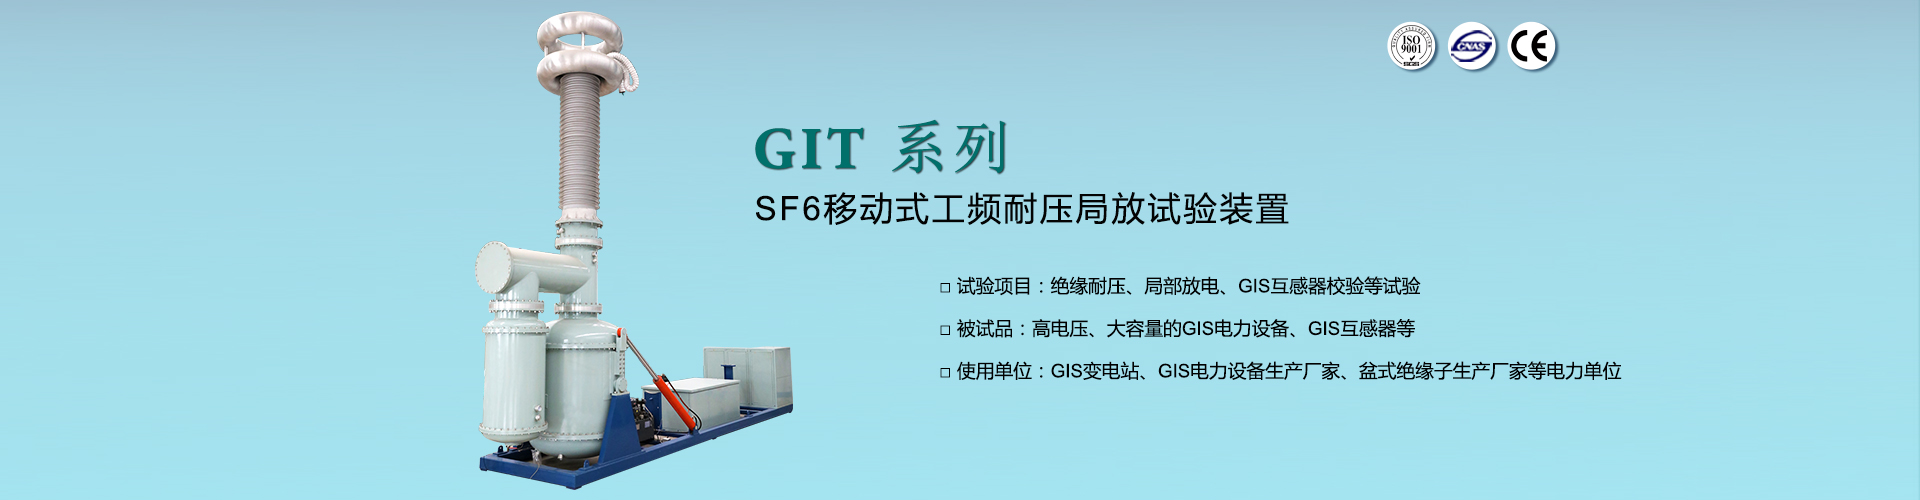 GIT试验设备